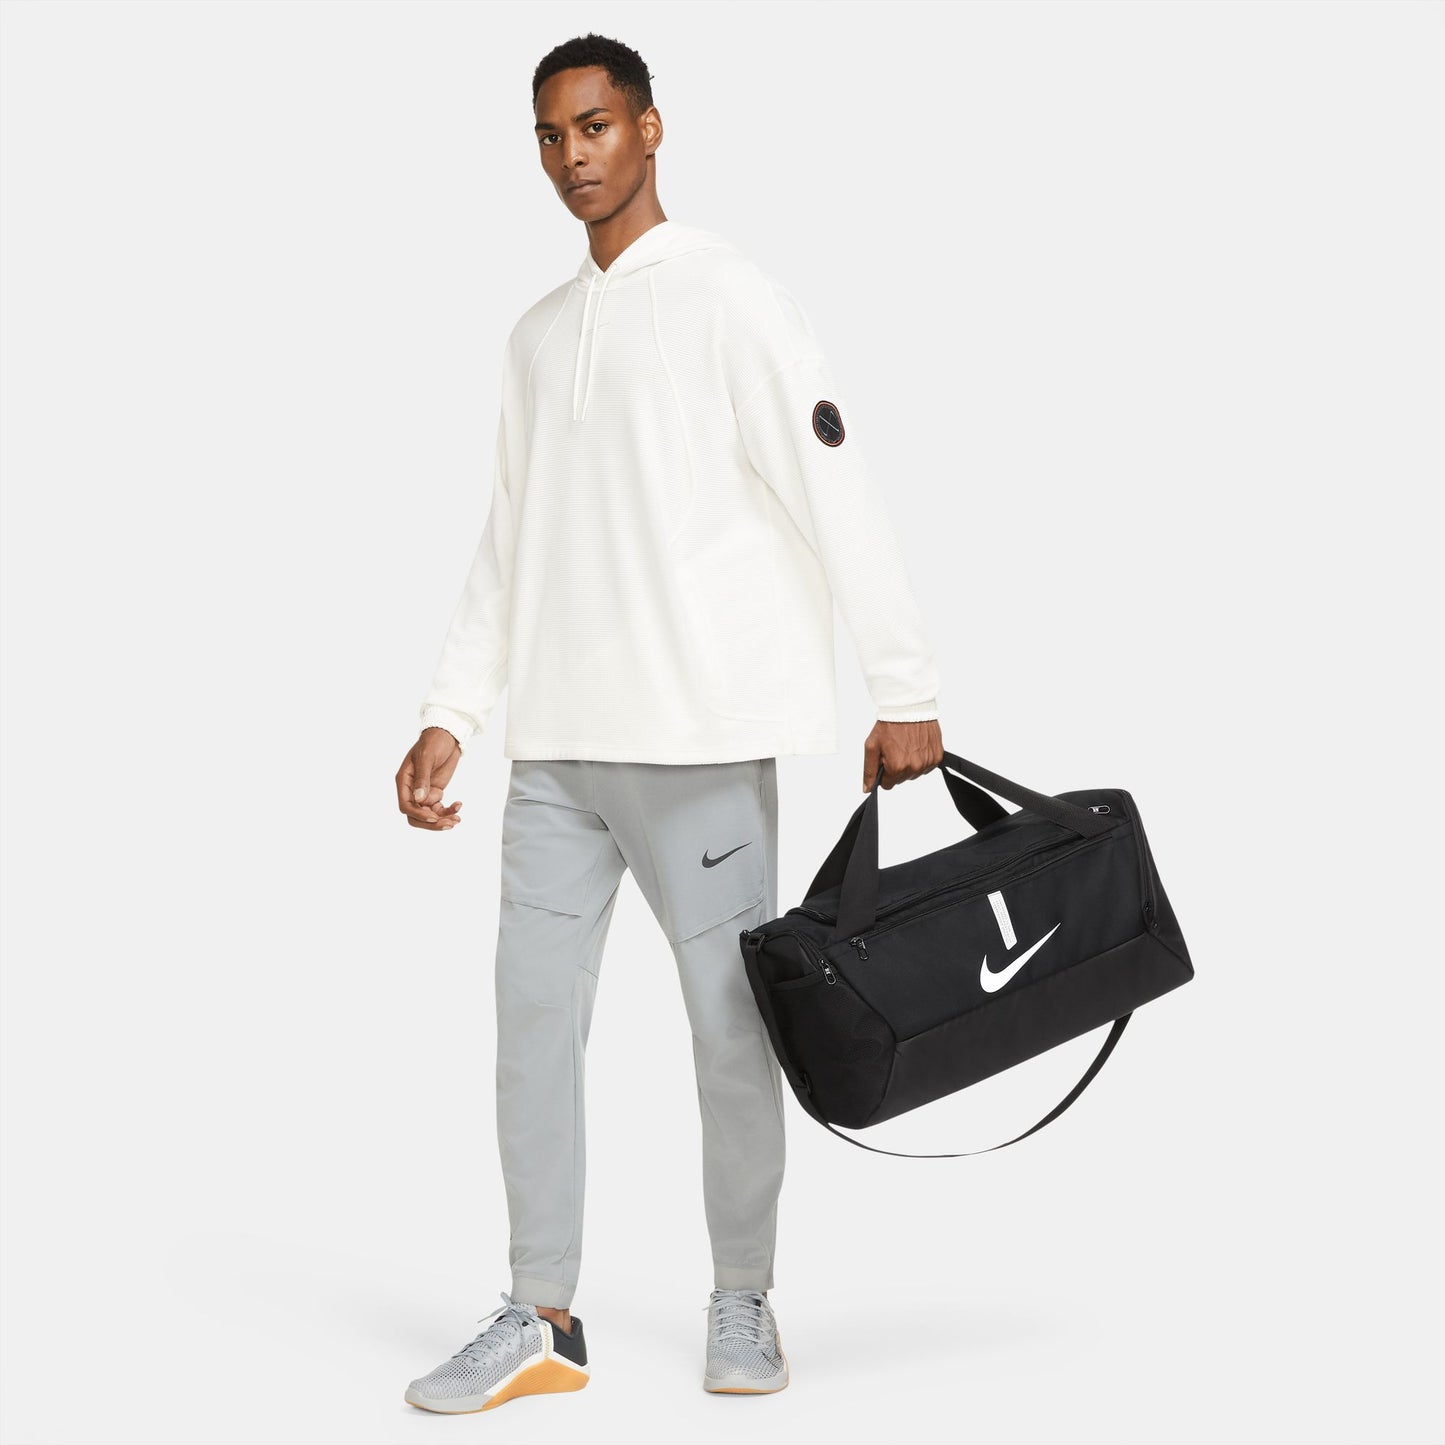 Nike Academy Team - Soccer Duffel Bag (Small, 41L) - Black